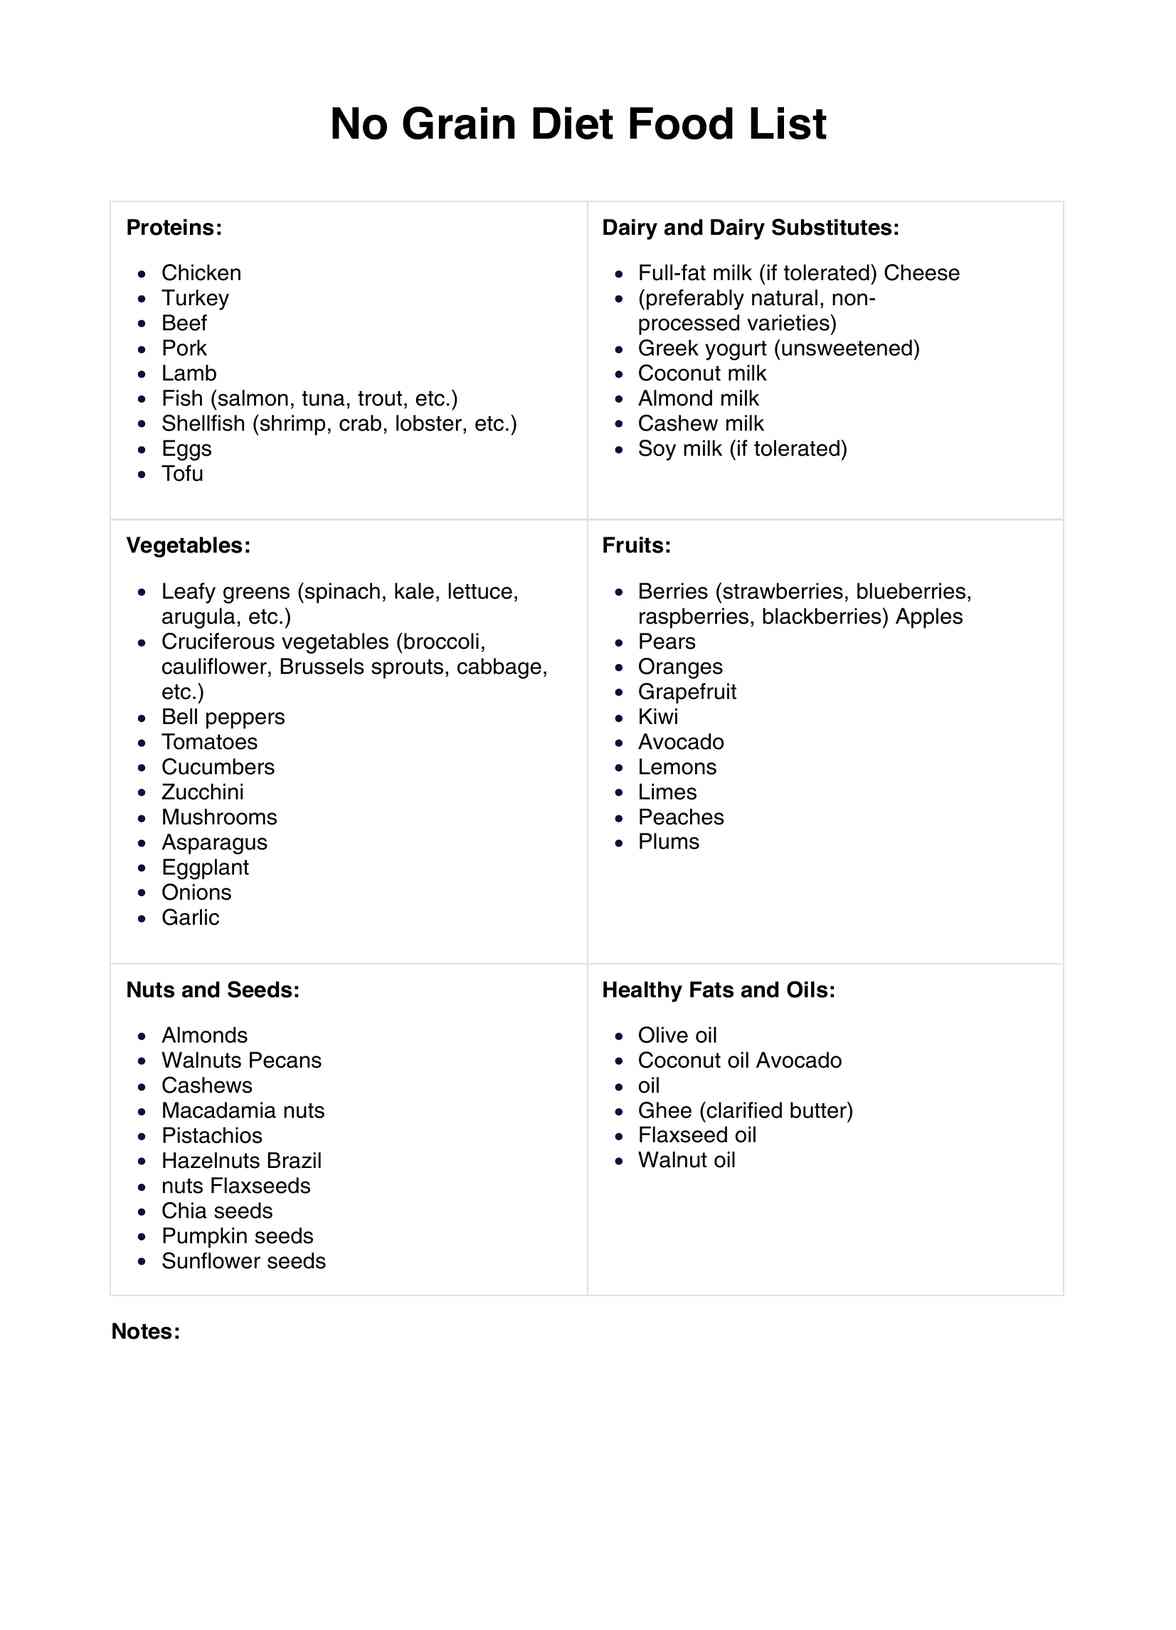 No Grain Diet Food List PDF Example